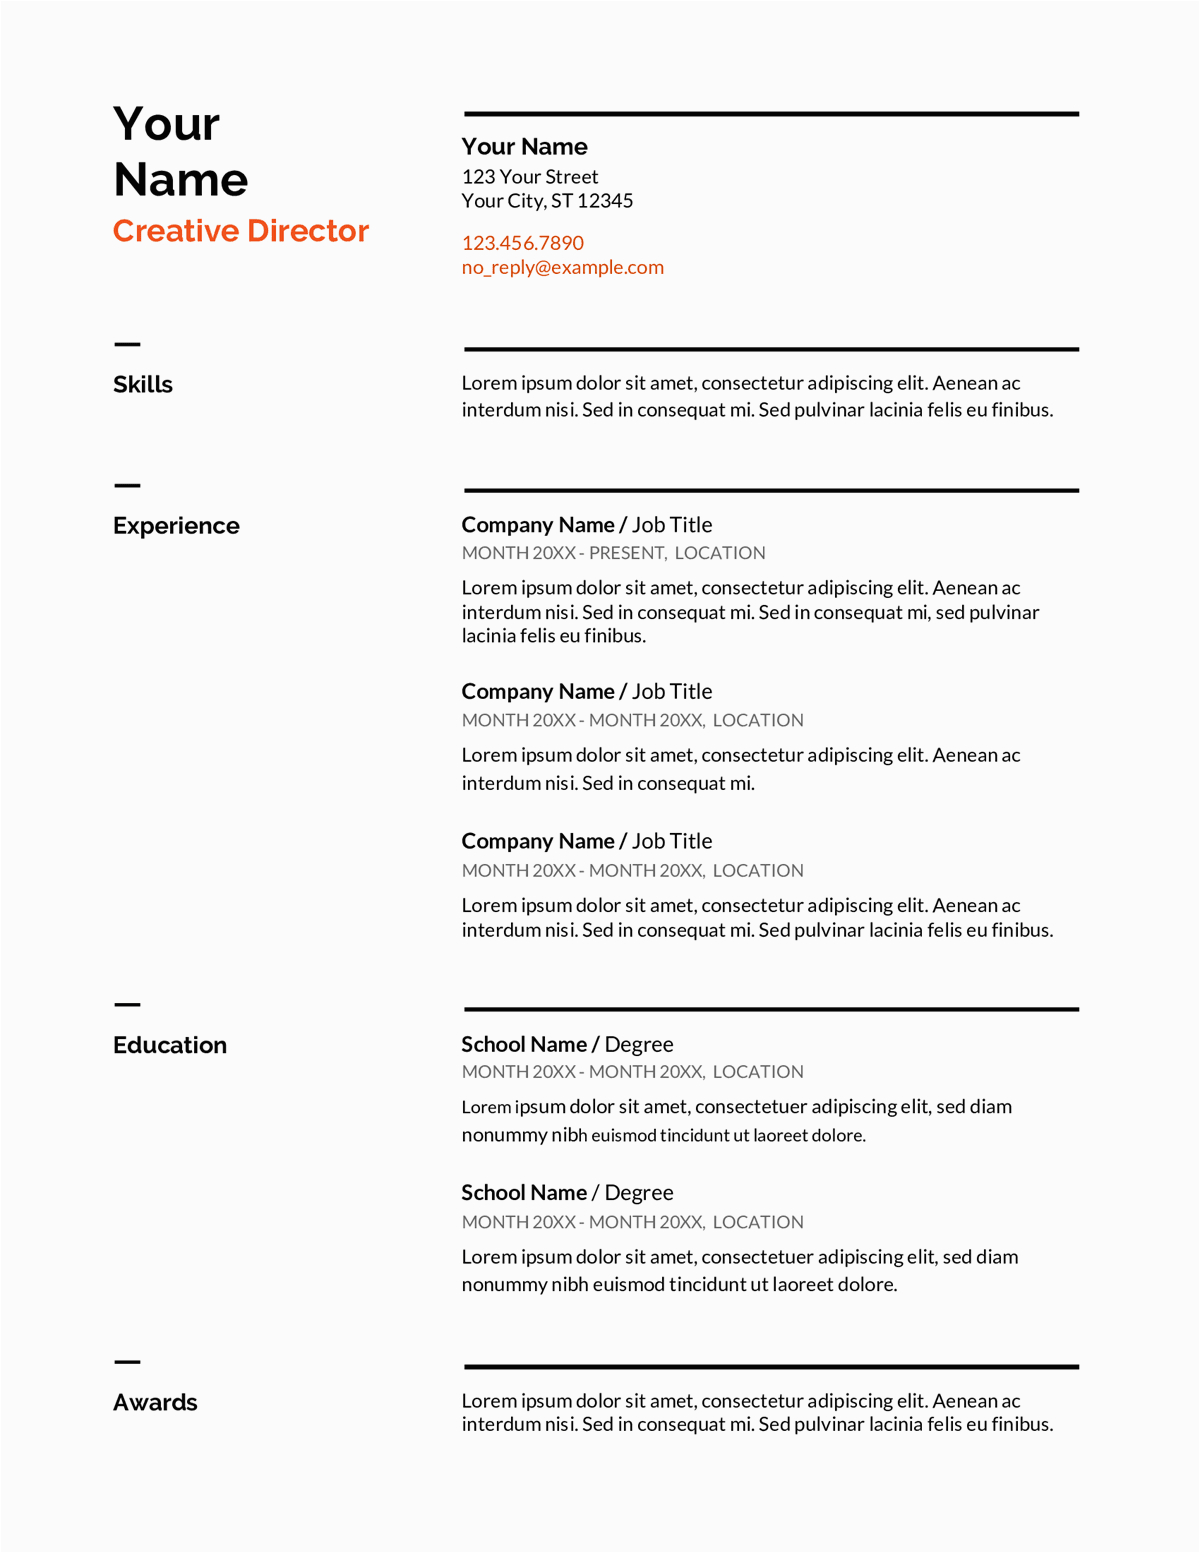 Sample Resume format for Online Job Application Job Resume Template